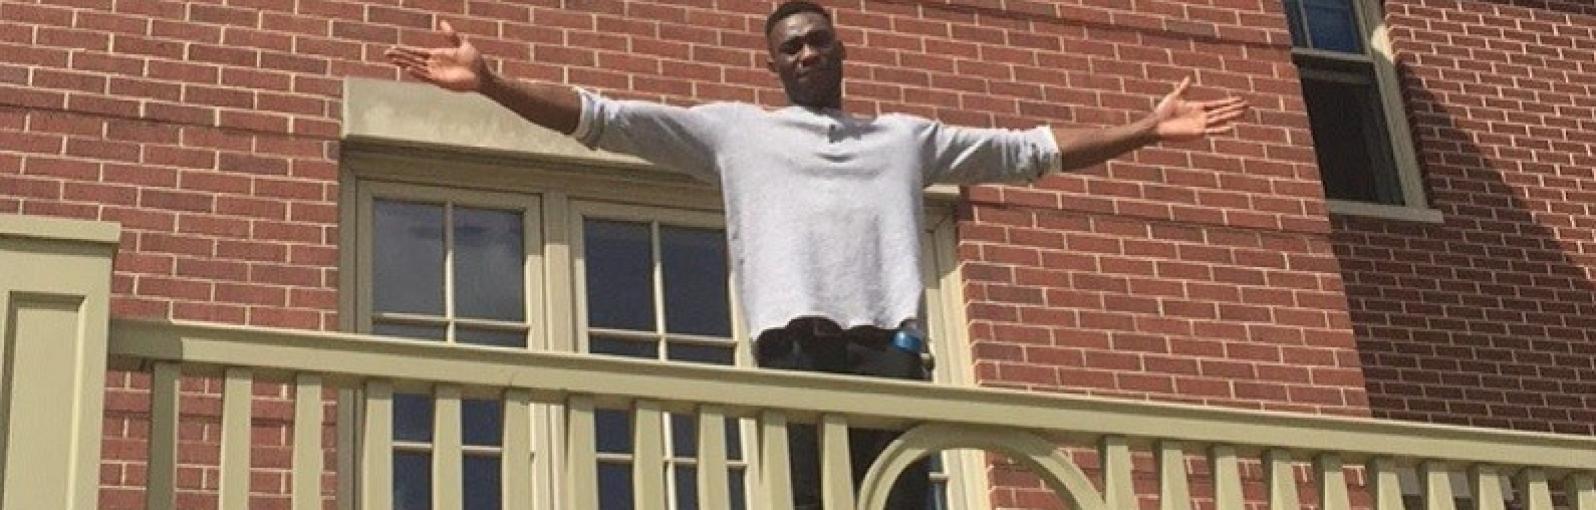 Emmanuel Adebayo on balcony in US